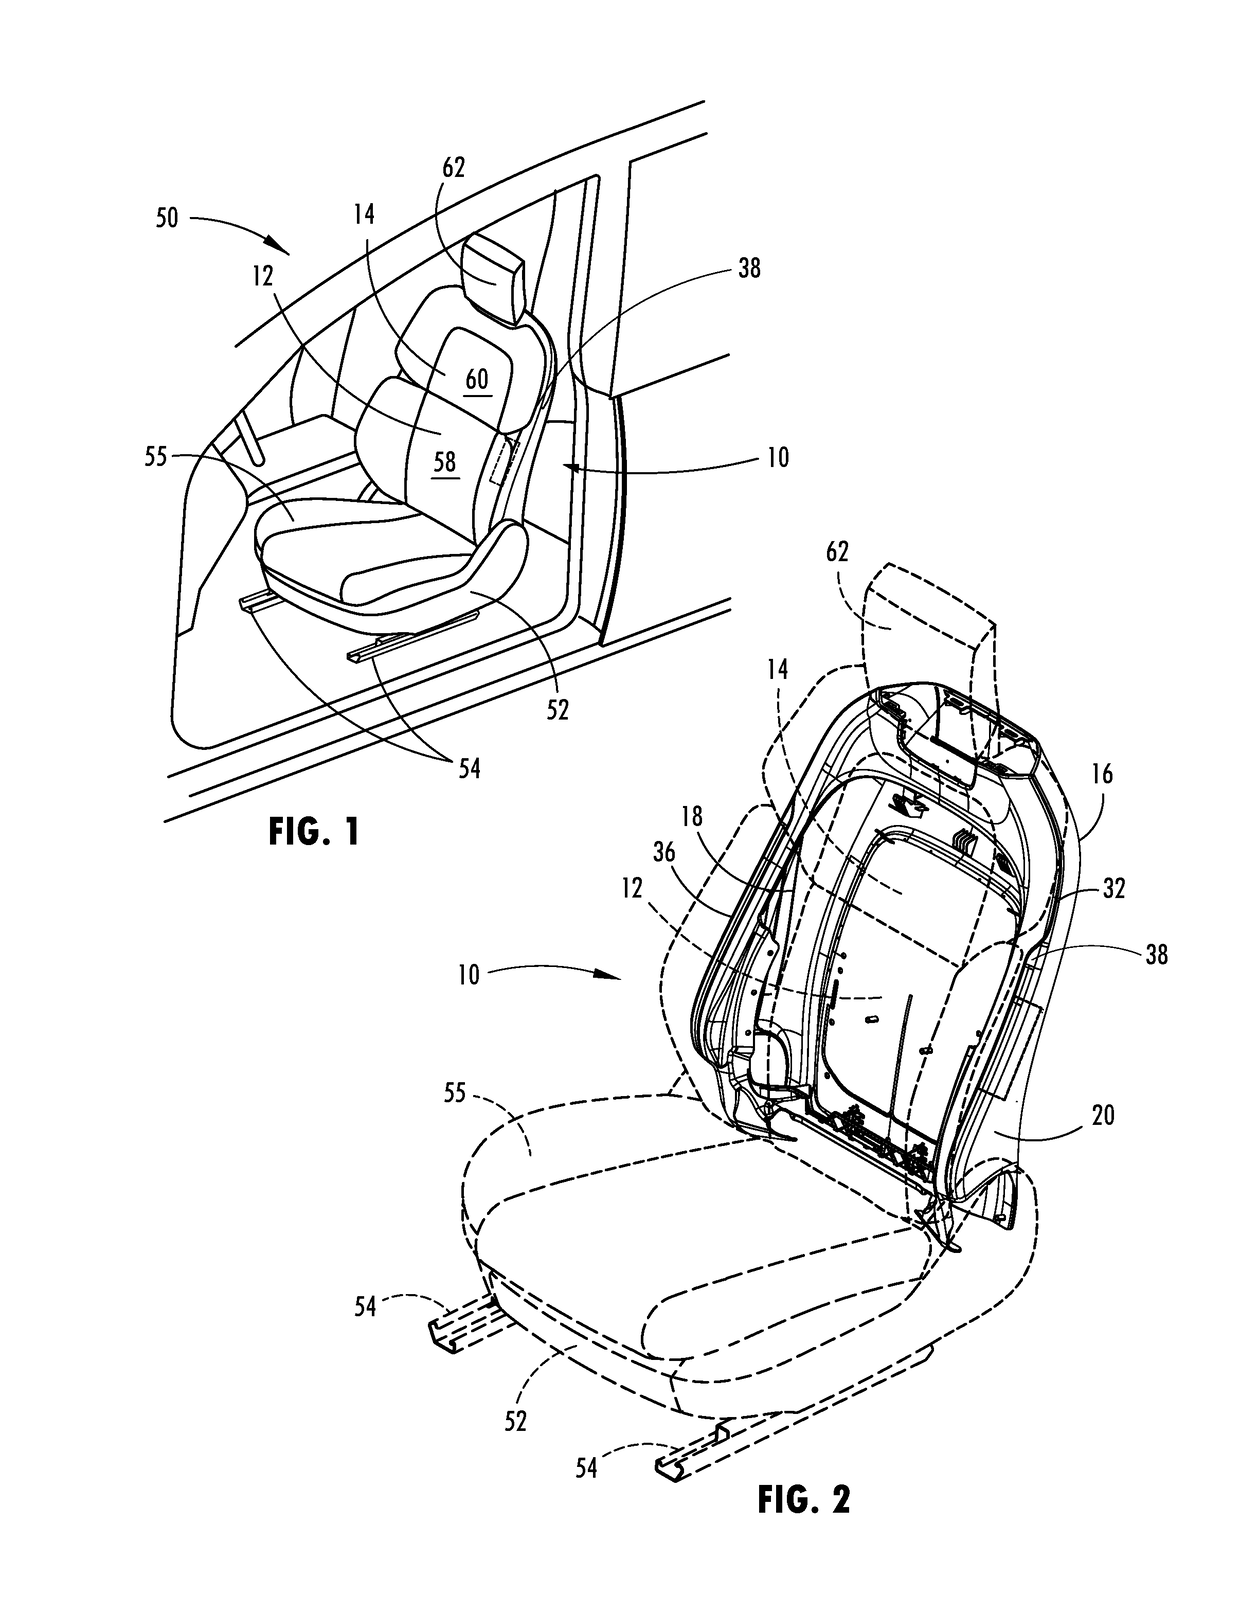 Seatback flexible slip plane joint for side air bag deployment